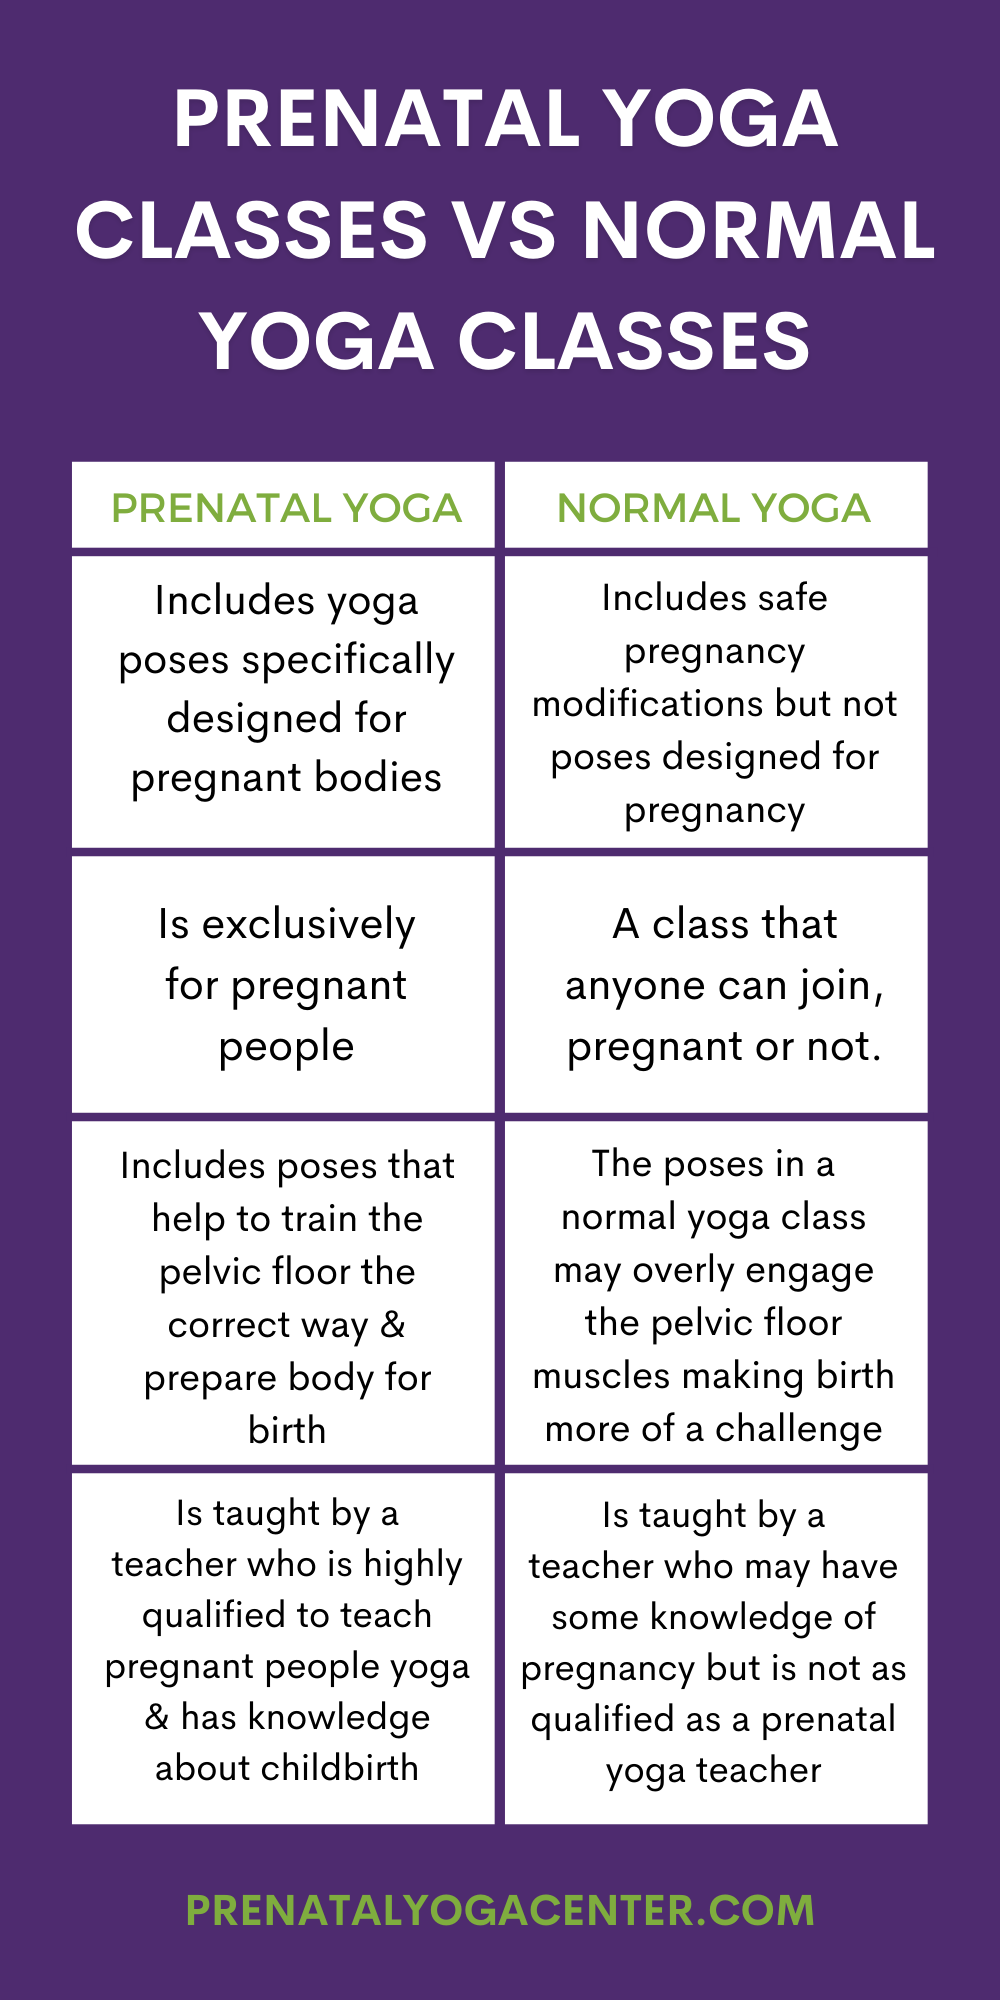 Prenatal Yoga Classes - The Family Tree Information, Education